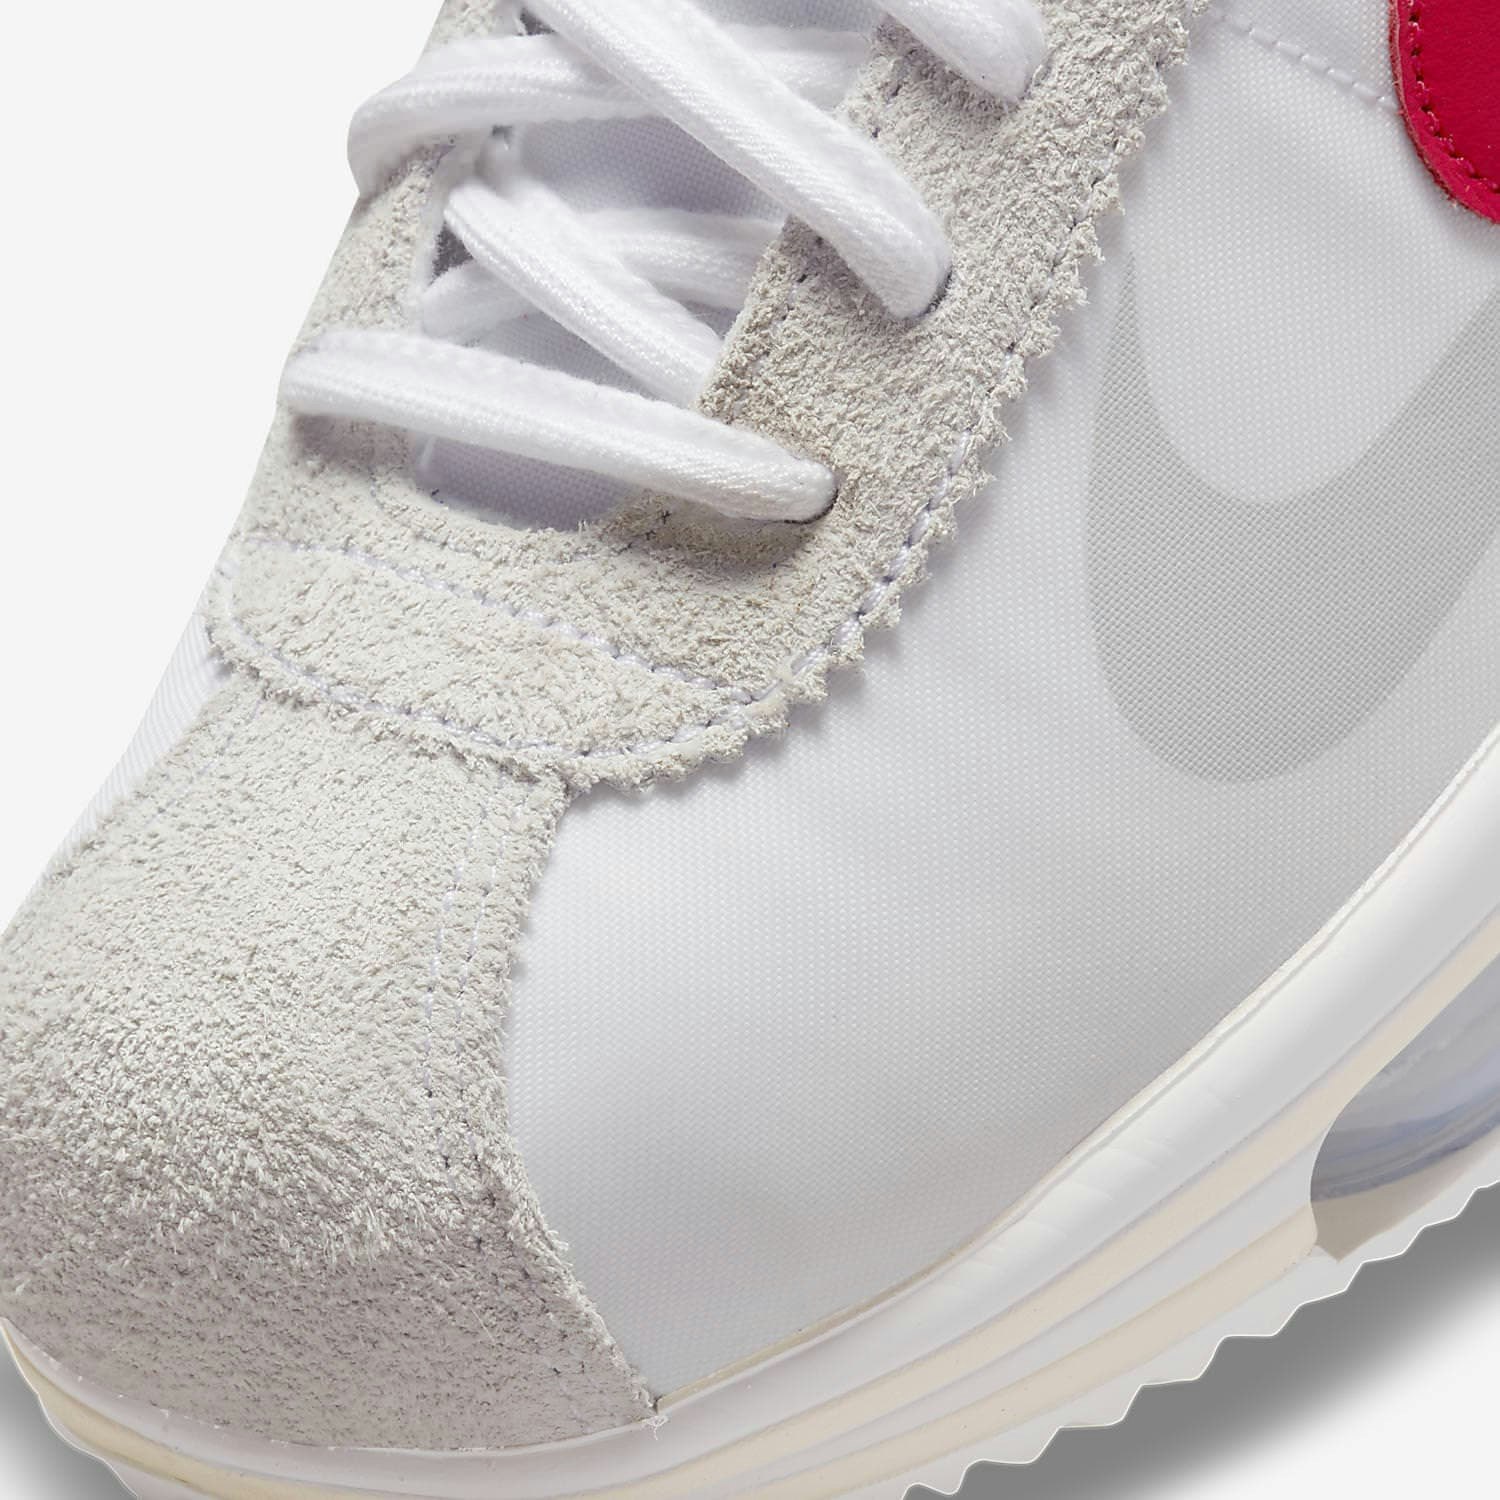 Sacai x Nike Cortez 4.0 “OG”